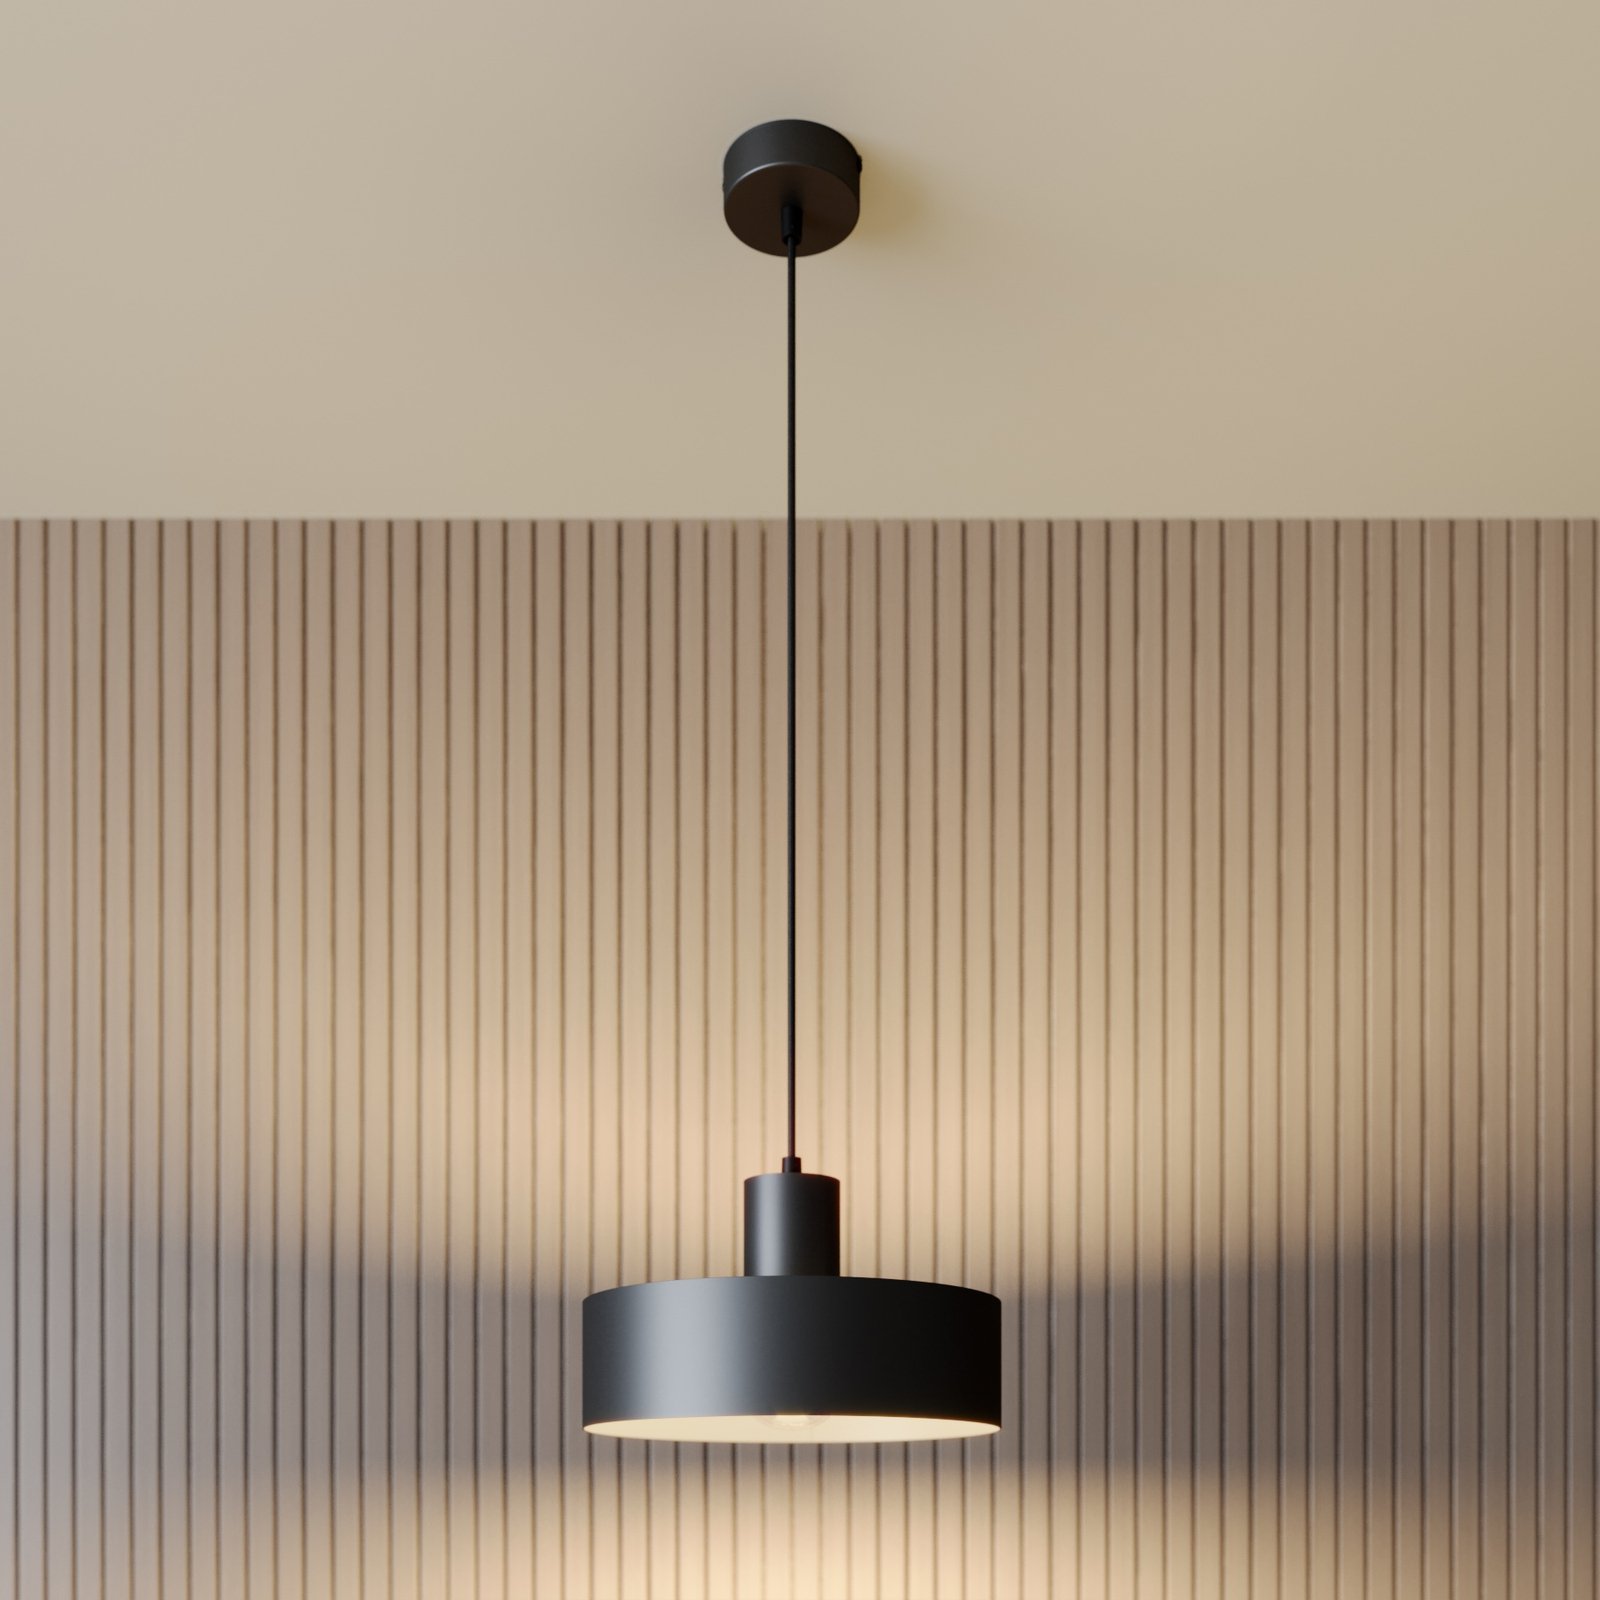 Rif hanging light made of metal, black, Ø 25 cm